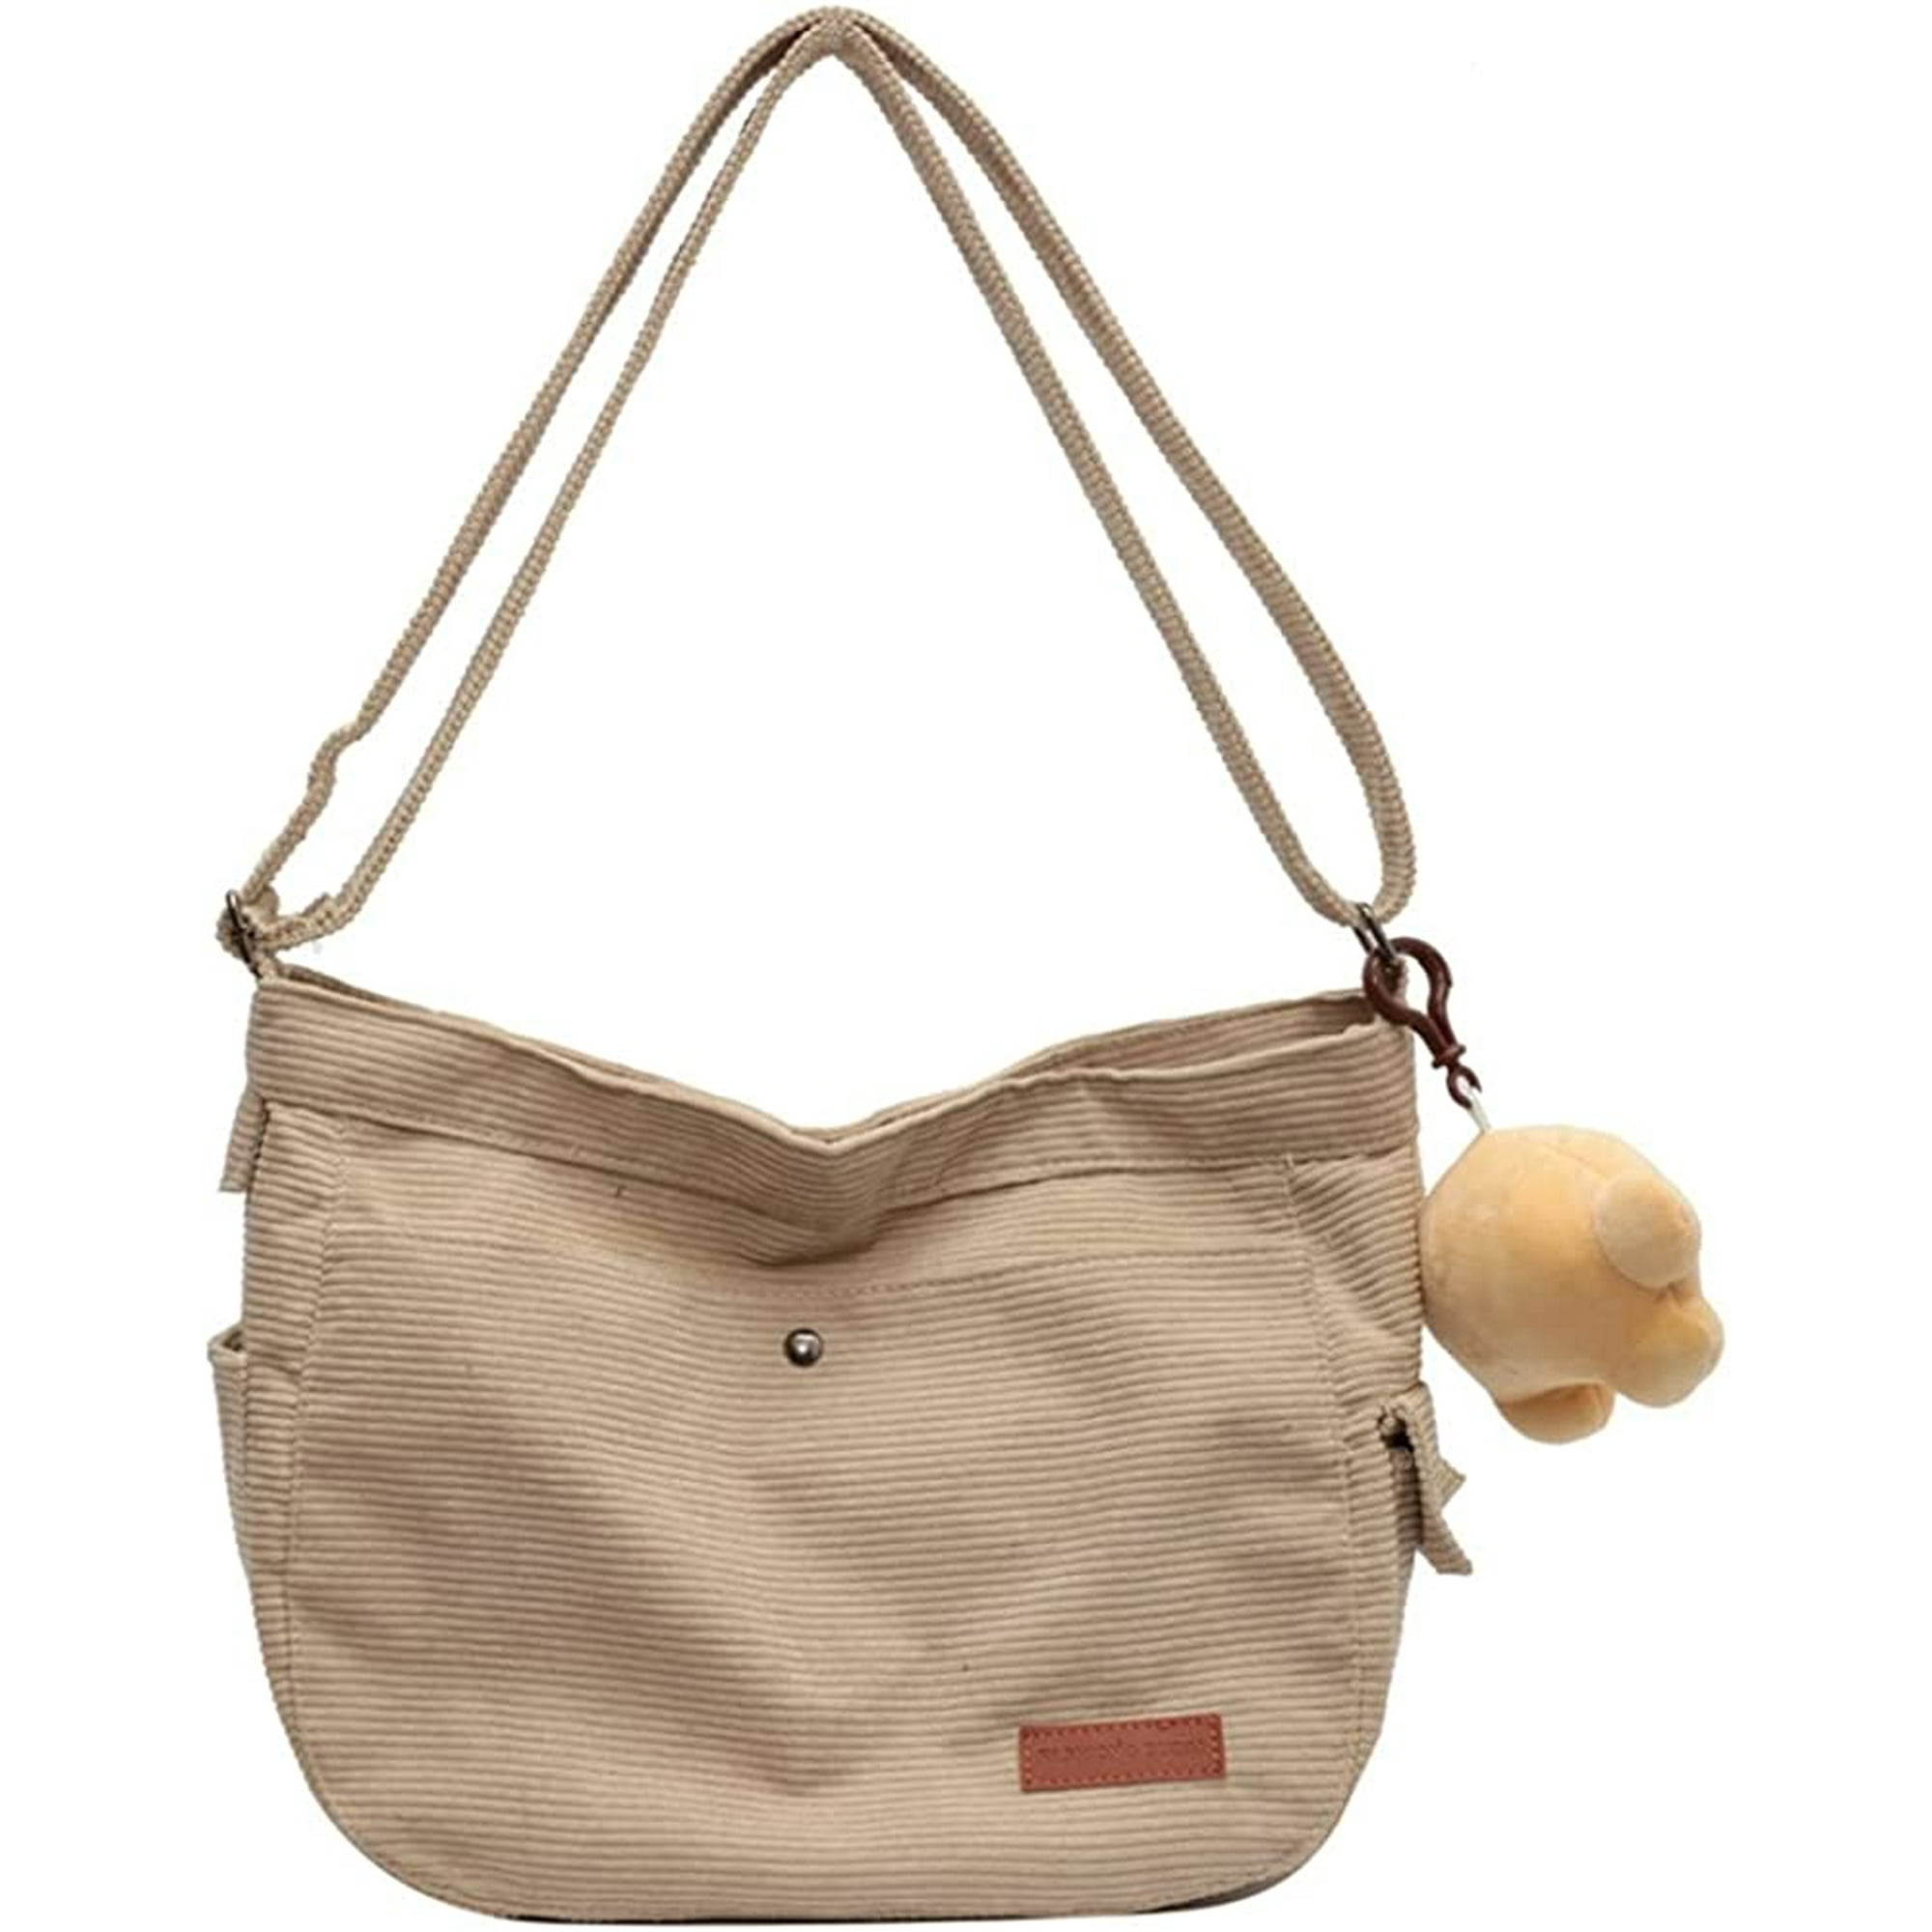 Men Outdoor Corduroy Casual Tote Messenger Bags Handbags Shoulder Bag BEIGE  